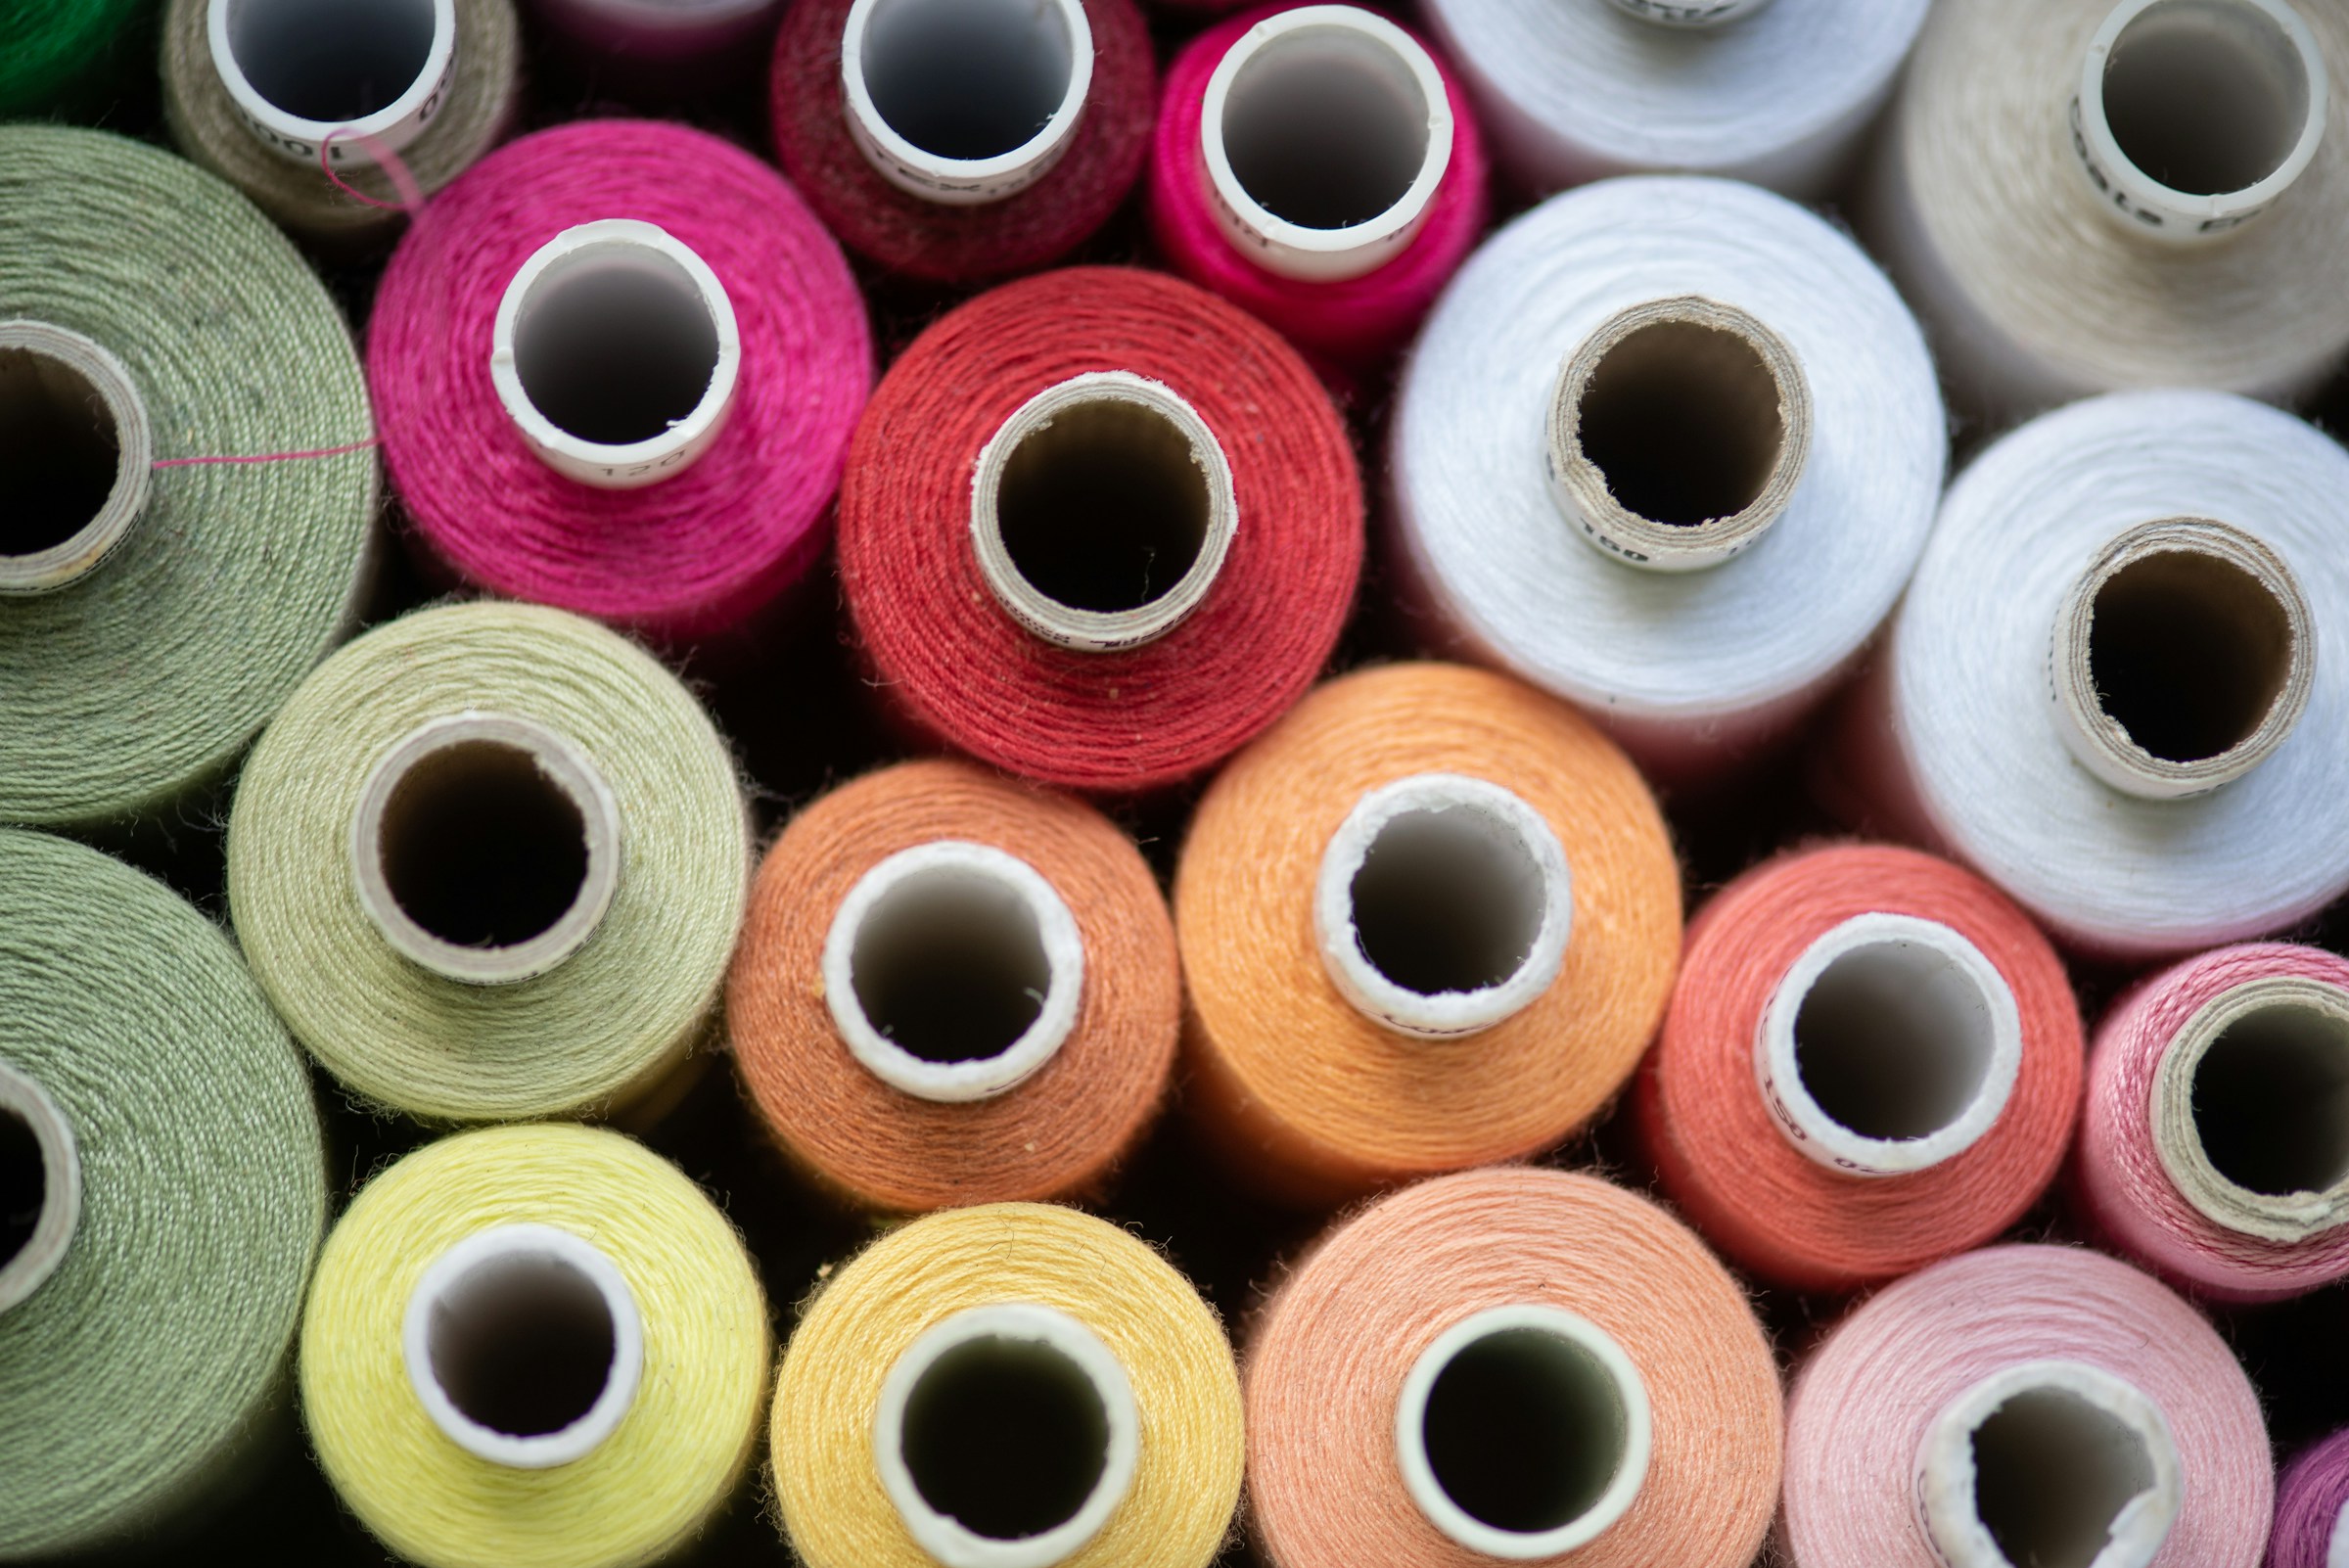 NEXTEVO and AMSilk Lead Sustainable Textile Innovation